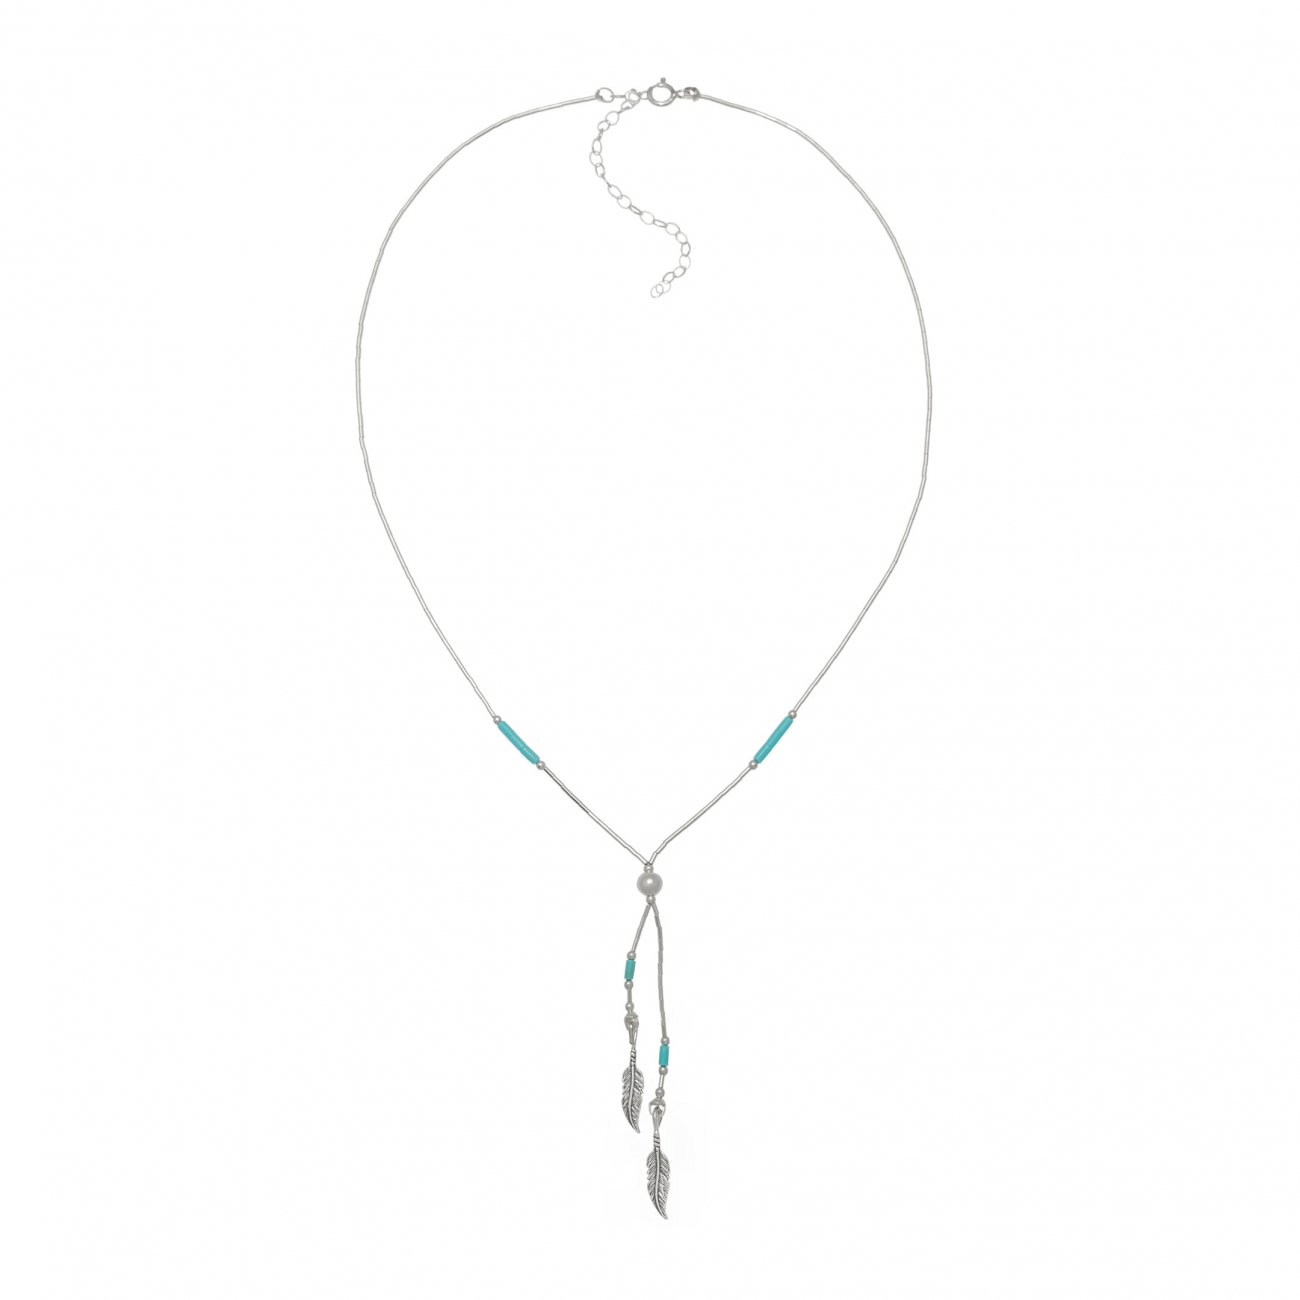 Harpo Paris classic necklace for women N603 feathers